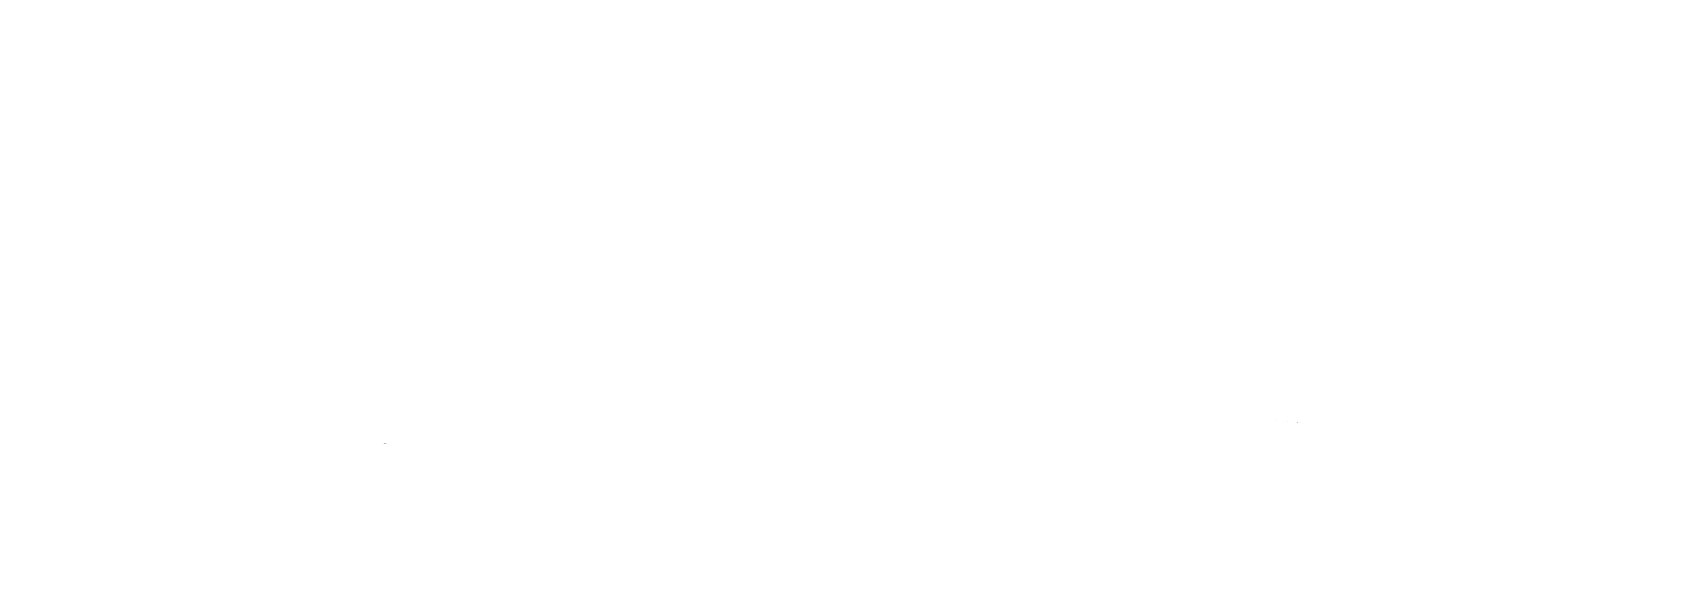 David Ferguson Photography Logo